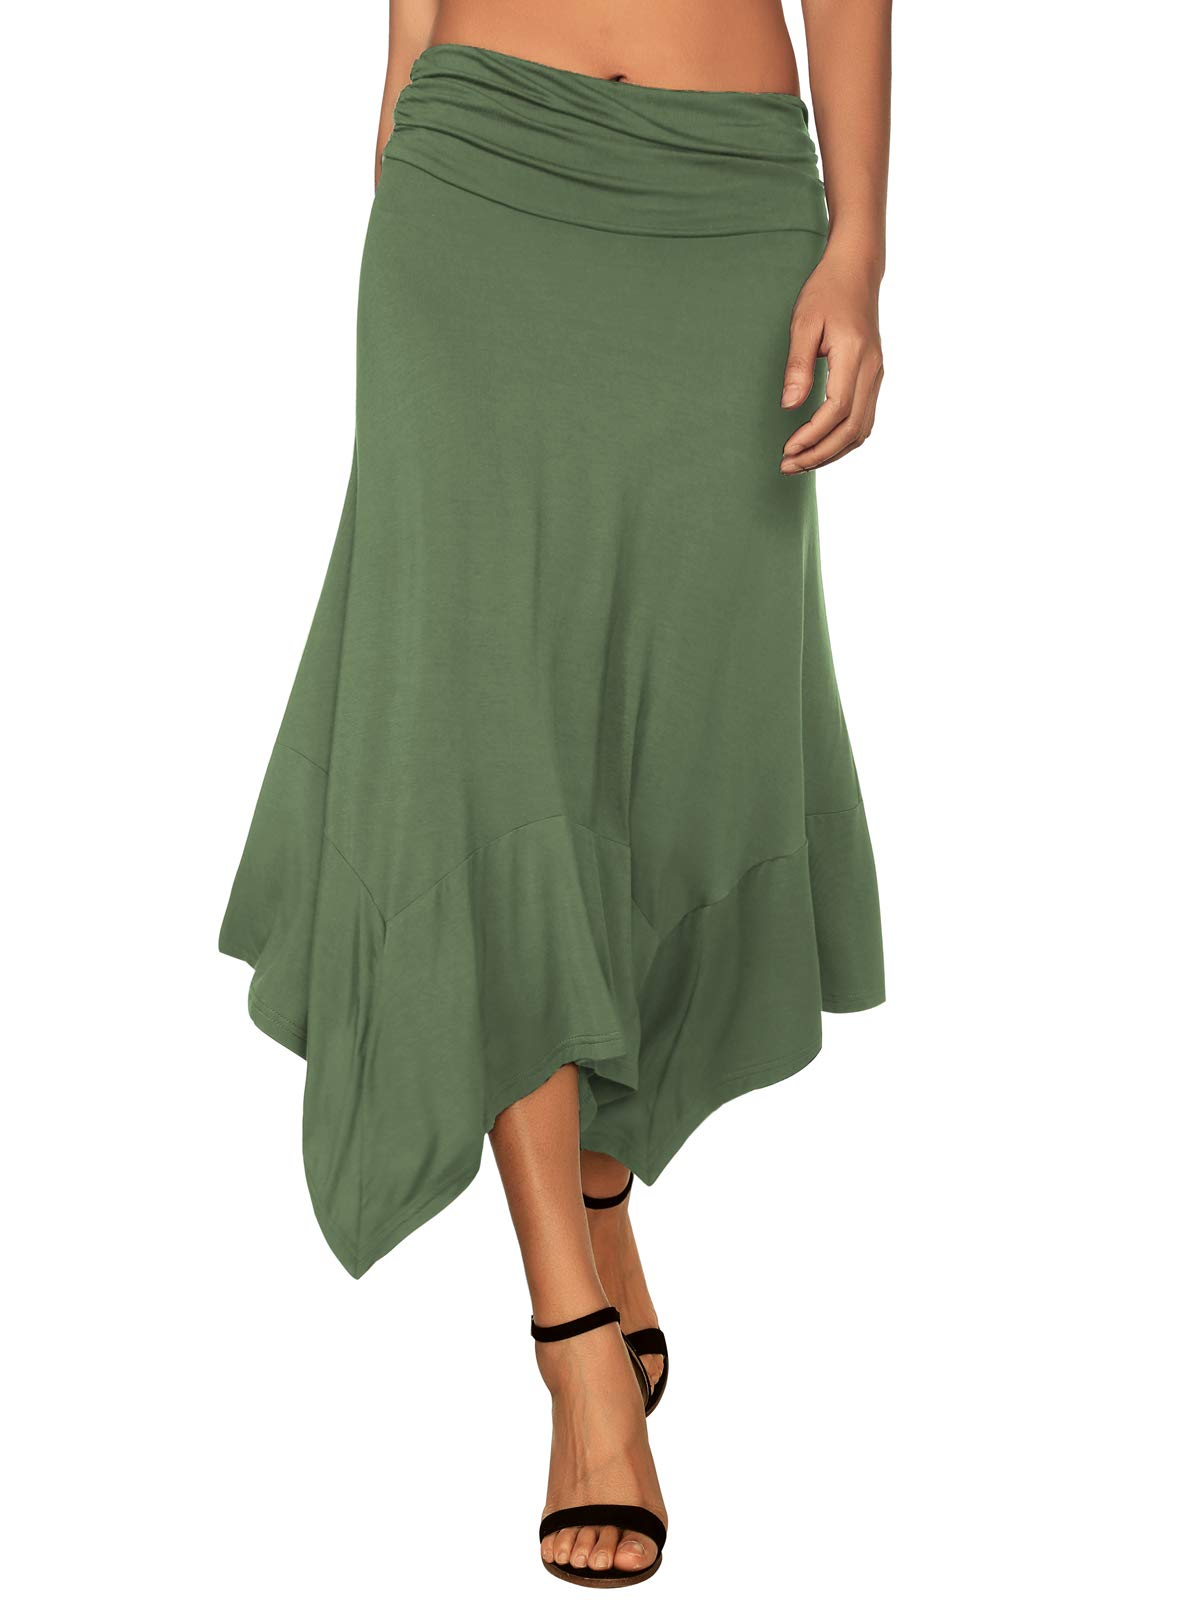 DJT Women's Green Flowy Handkerchief Hemline Midi Skirt